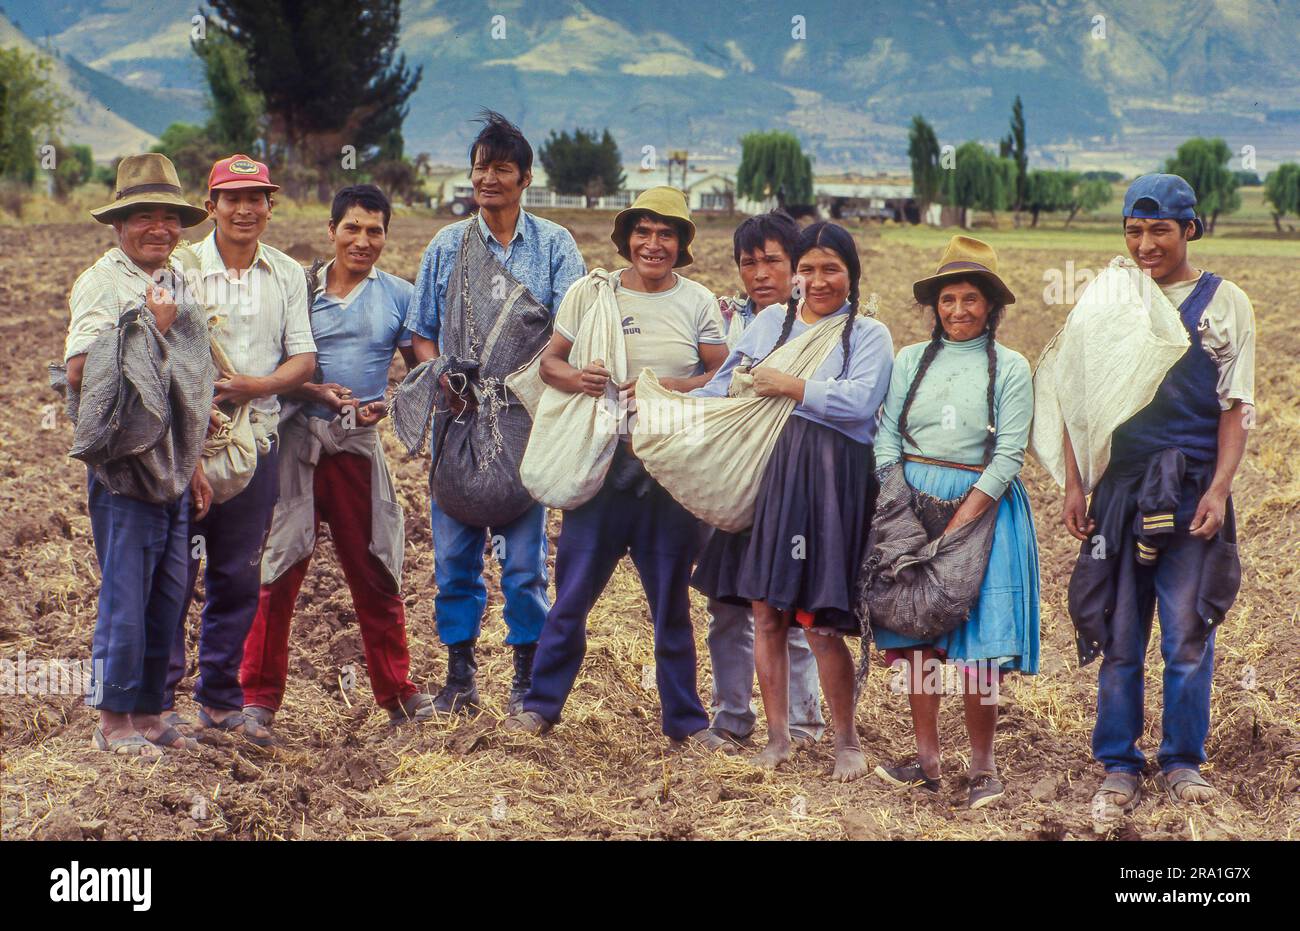 Peru, Cusco region, group of farm workers has lunch break after potato harvest Stock Photo